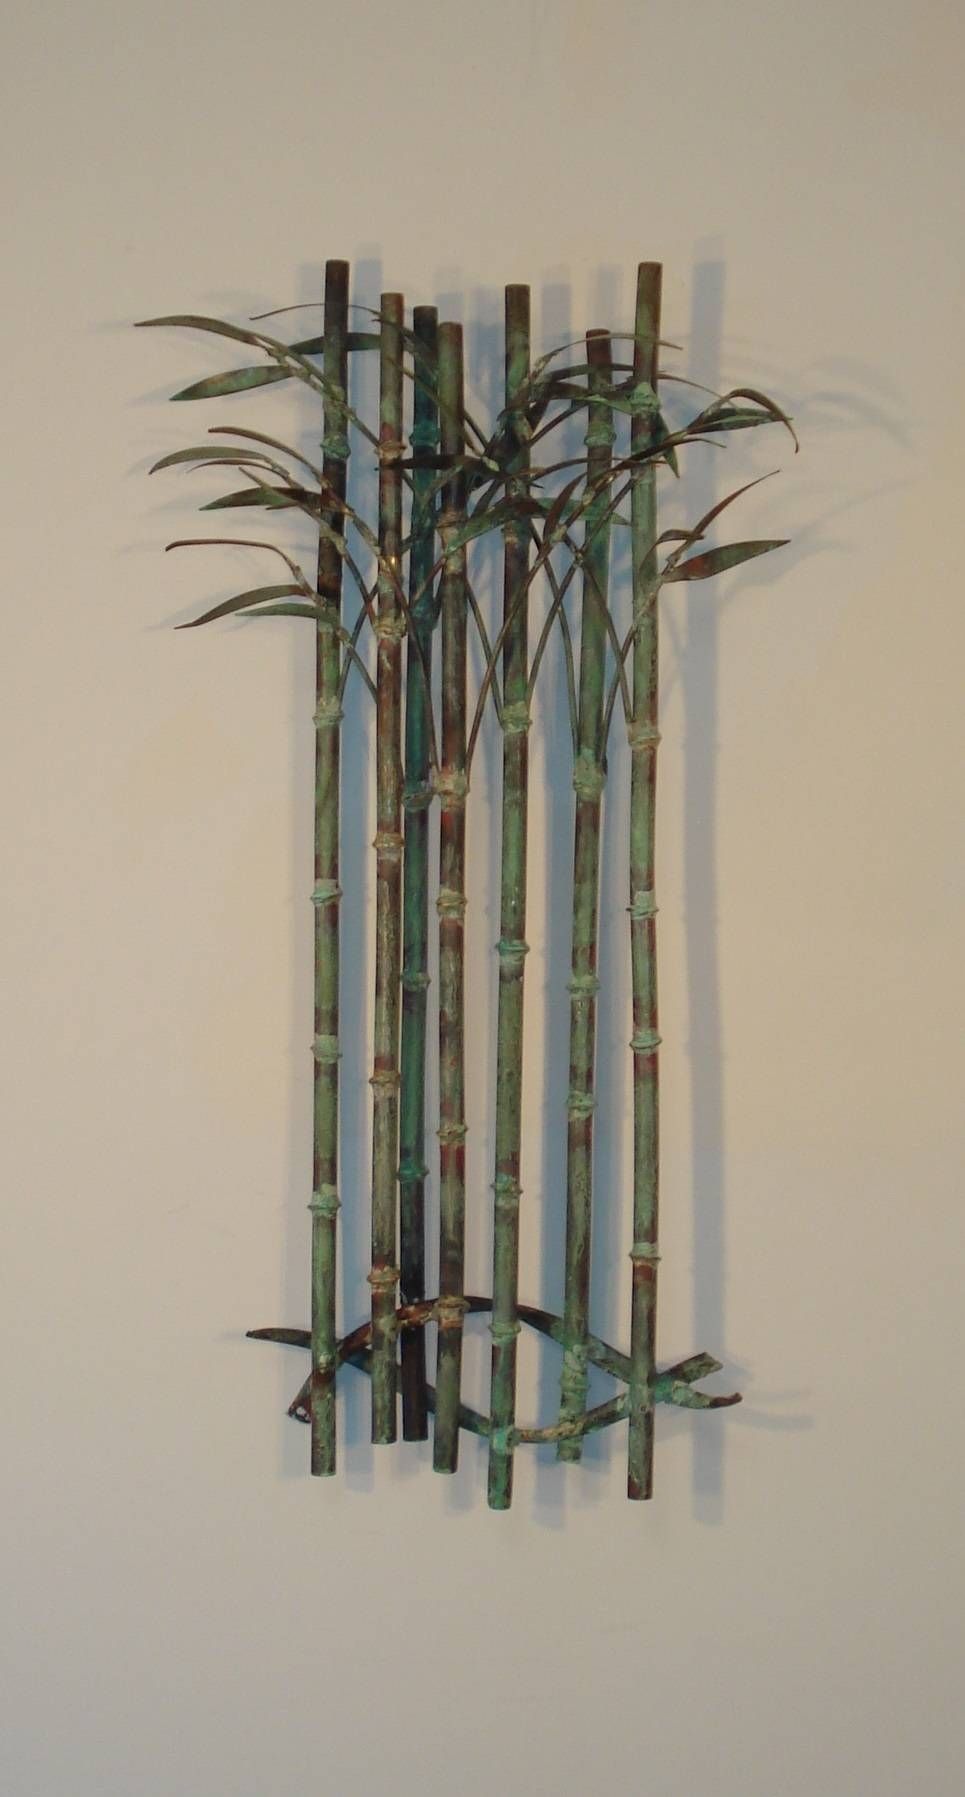 Bamboo Delight Metal Wall Art – Metal Wall Sculpture Decor Inside Most Current Bamboo Metal Wall Art (View 11 of 25)